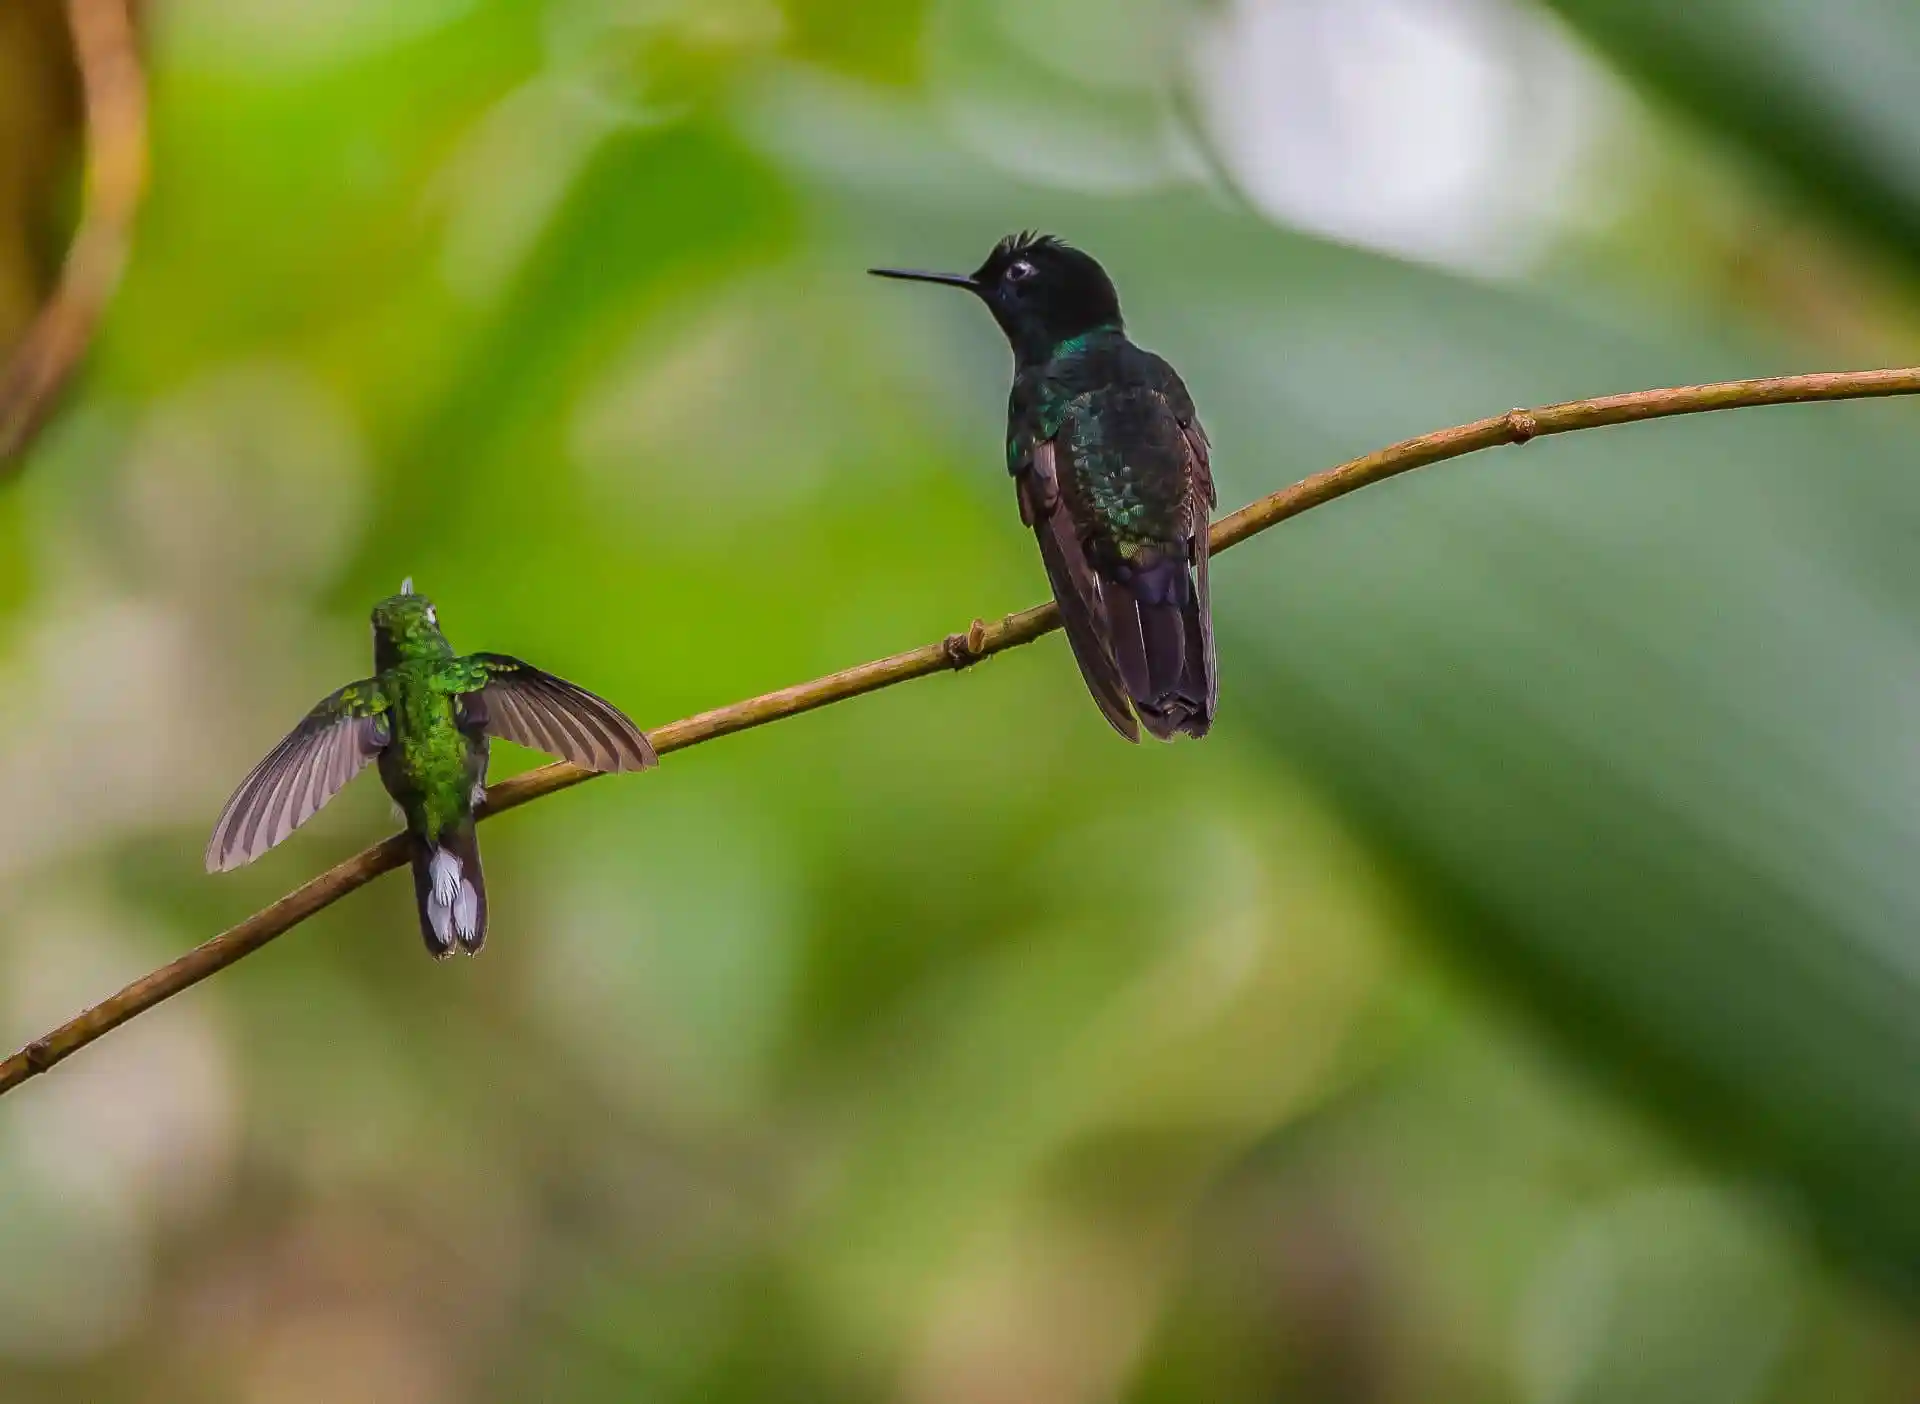 Birds on a branch, one in flight, in the biodiverse Mashpi forest, Ecuador.